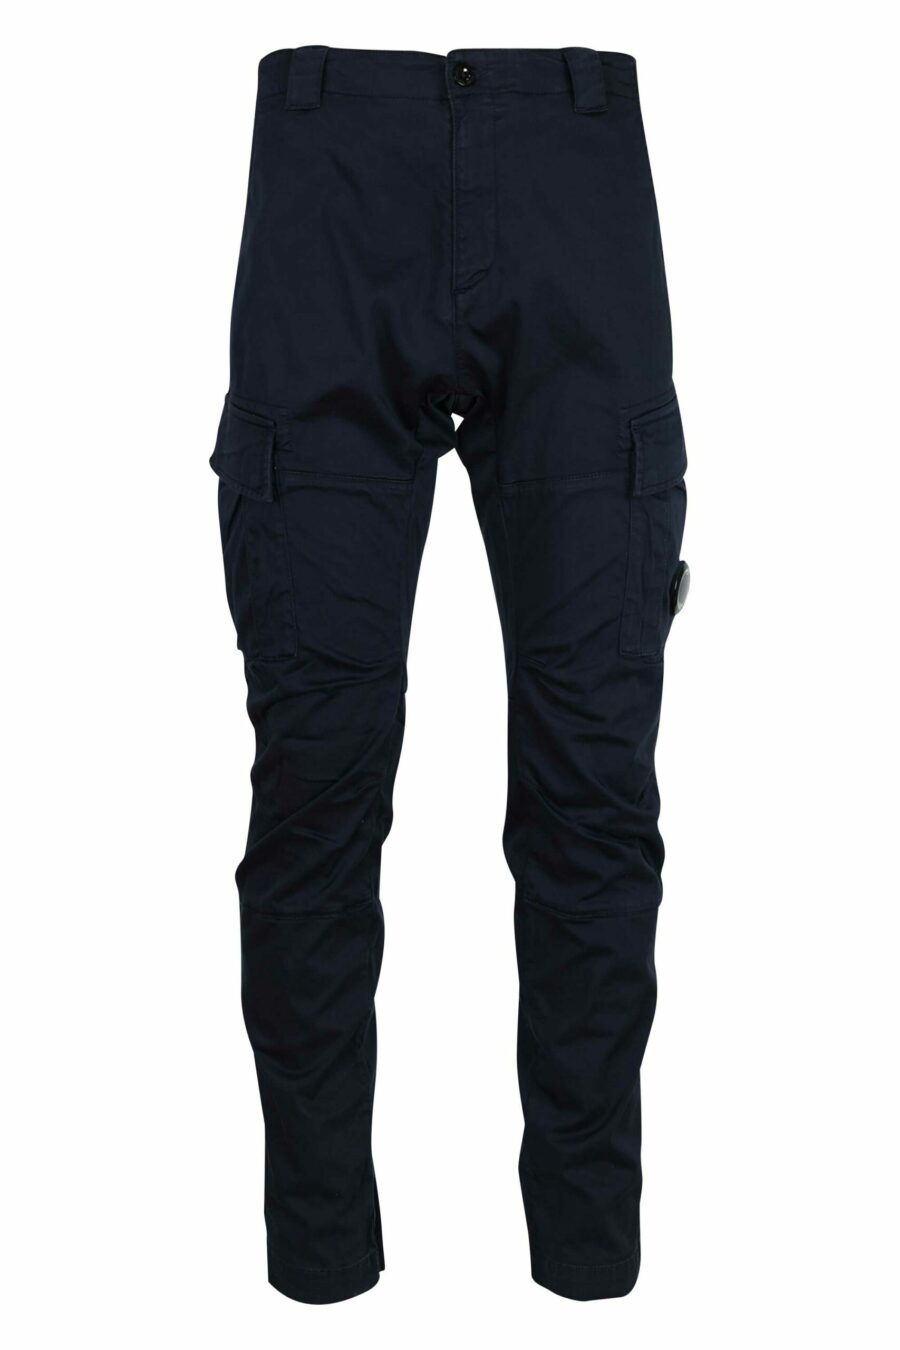 Pantalon cargo bleu foncé avec mini-logo - 7620943717624